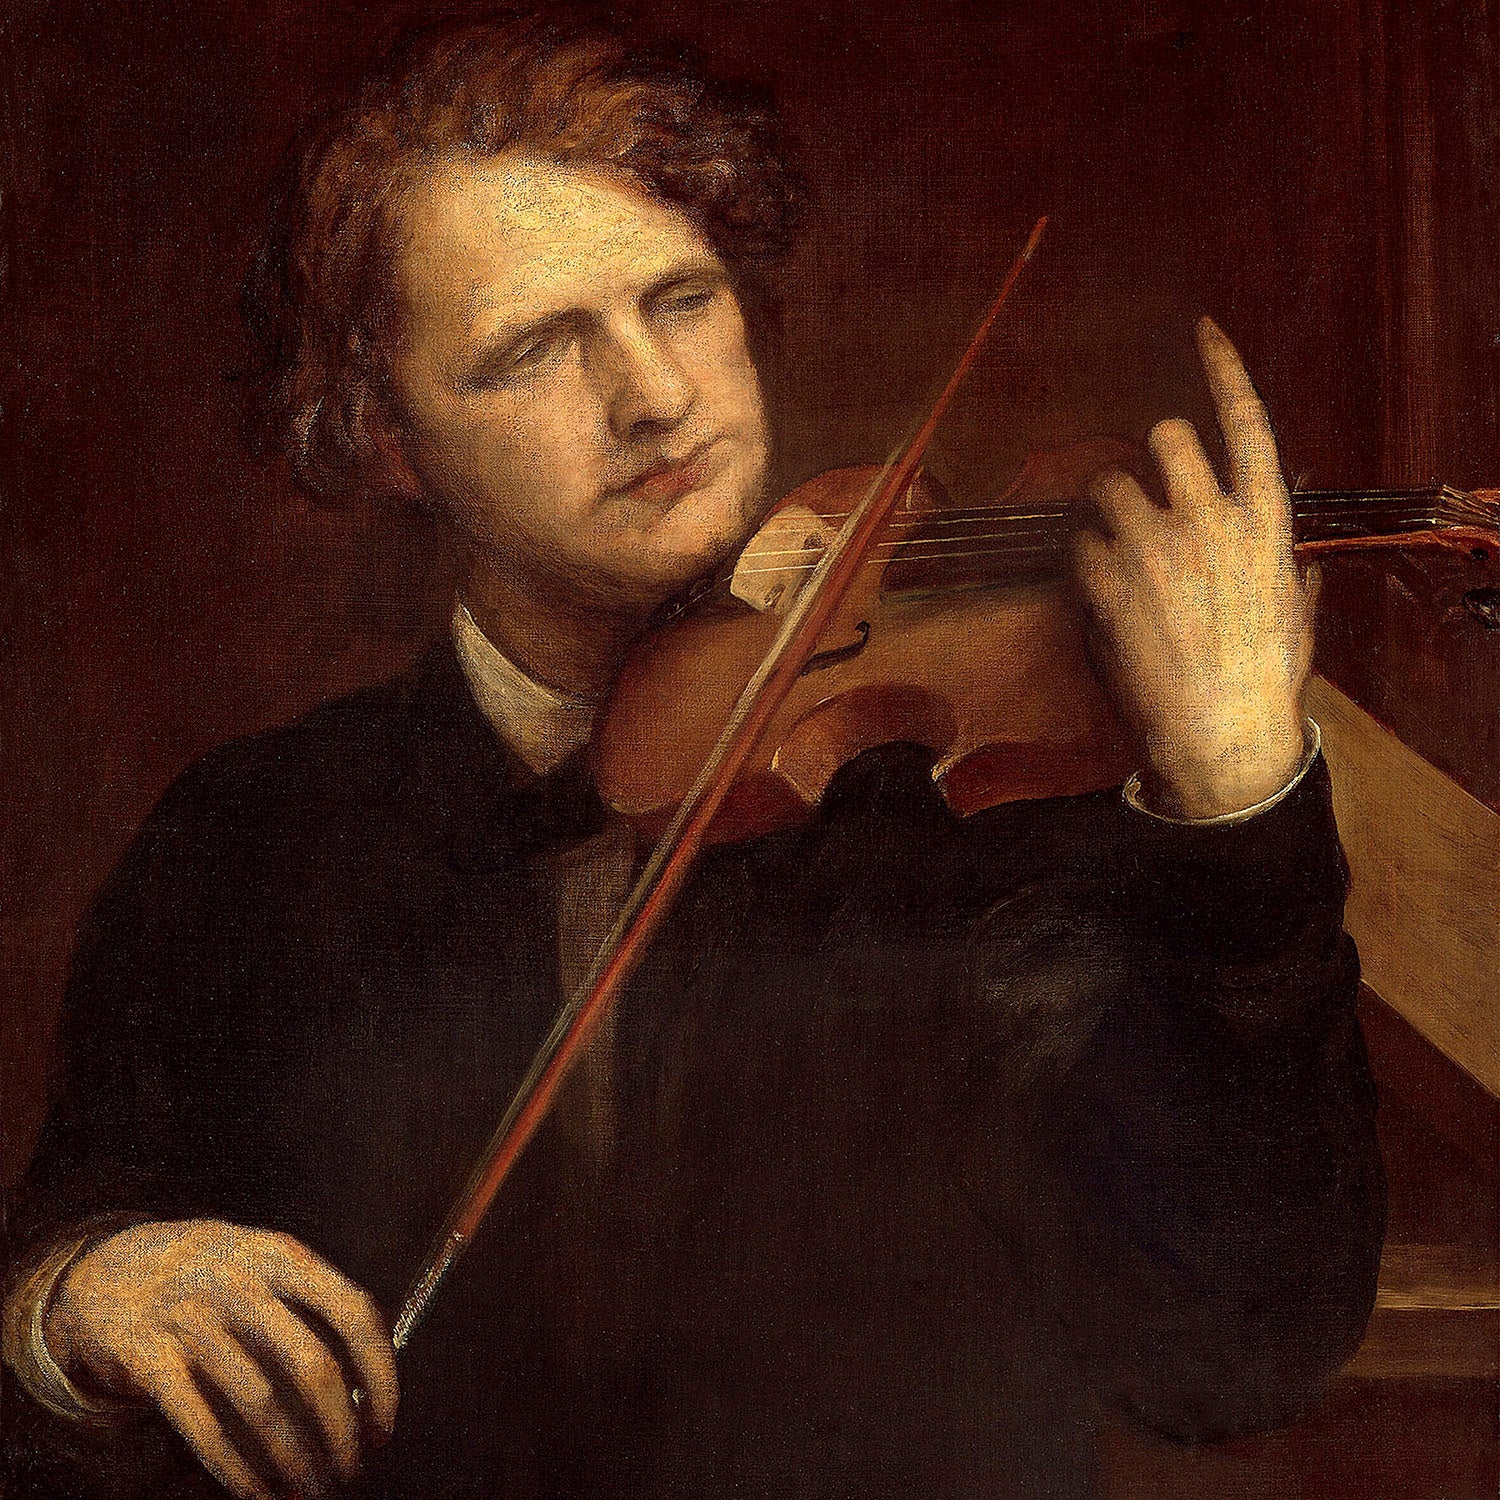 the violinist